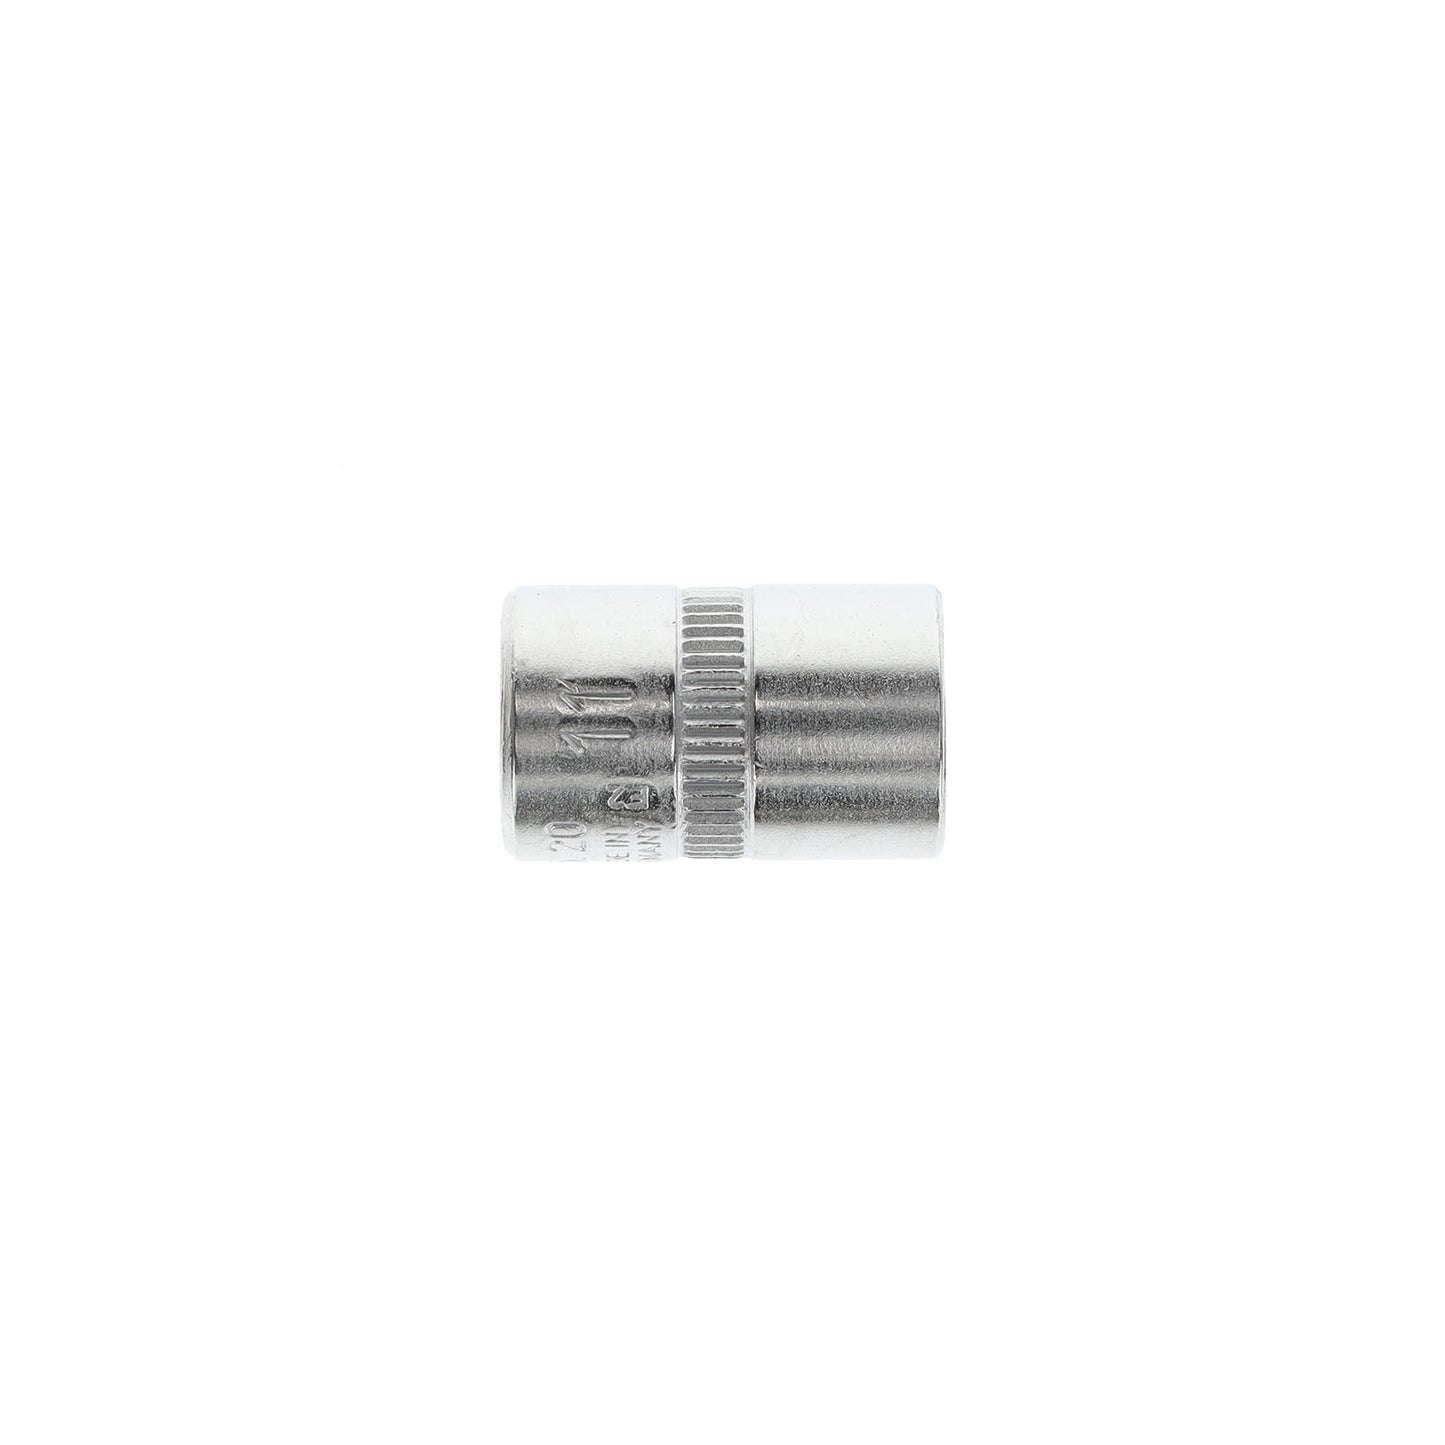 GEDORE 20 11 - Hexagonal Socket 1/4", 11mm (6166480)